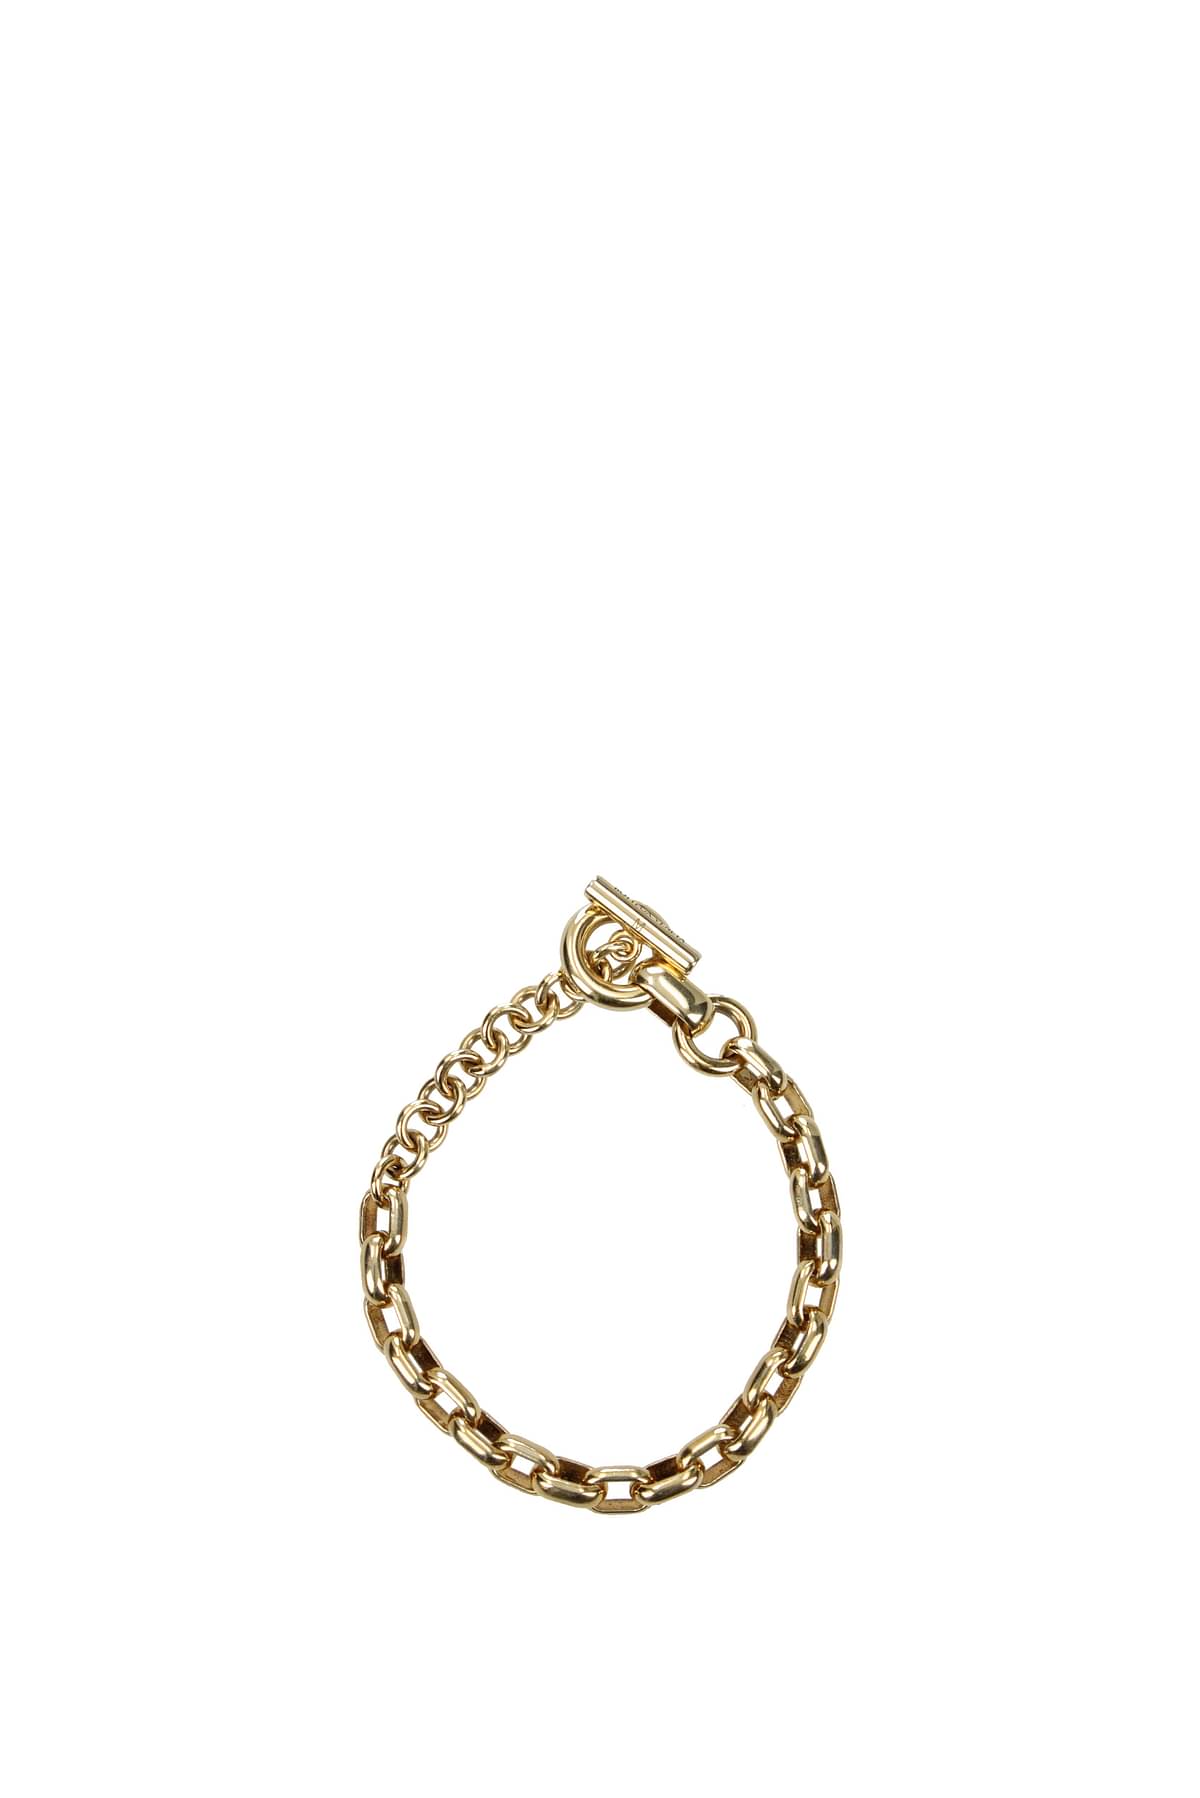 Bottega Veneta Two Tone Braided & Chain Bracelet In Gold,silver